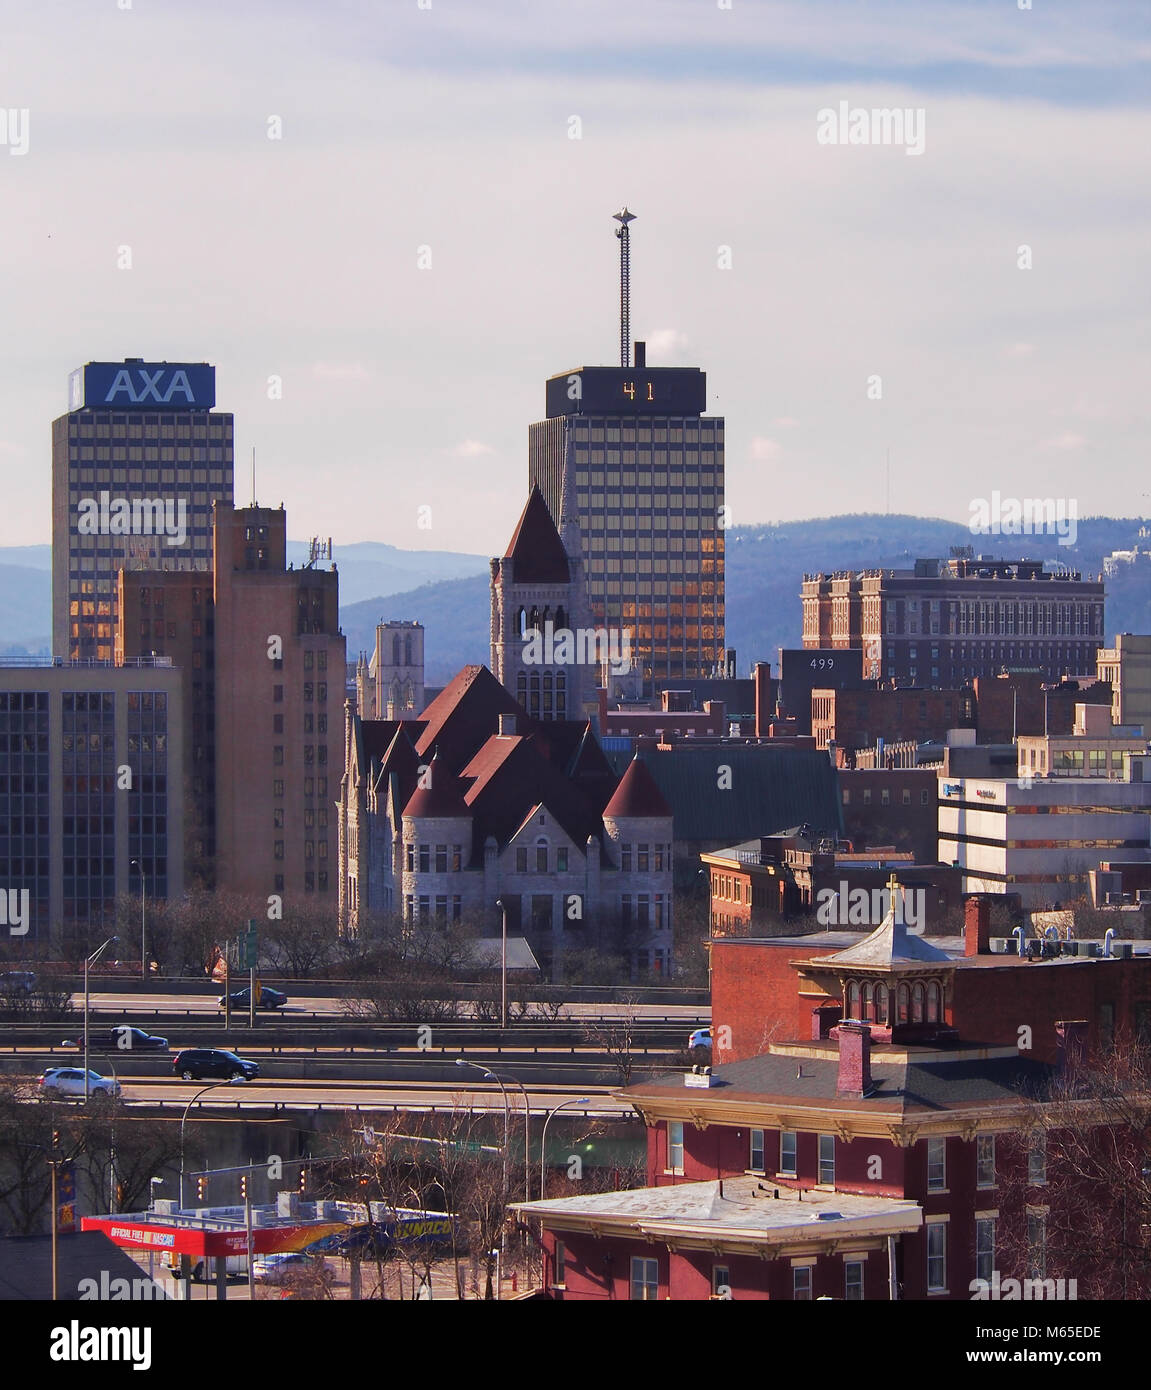 Syracuse, New York, USA. February 26, 2018. Downtown Syracuse , New York with the AXA Towers and City Hall Stock Photo